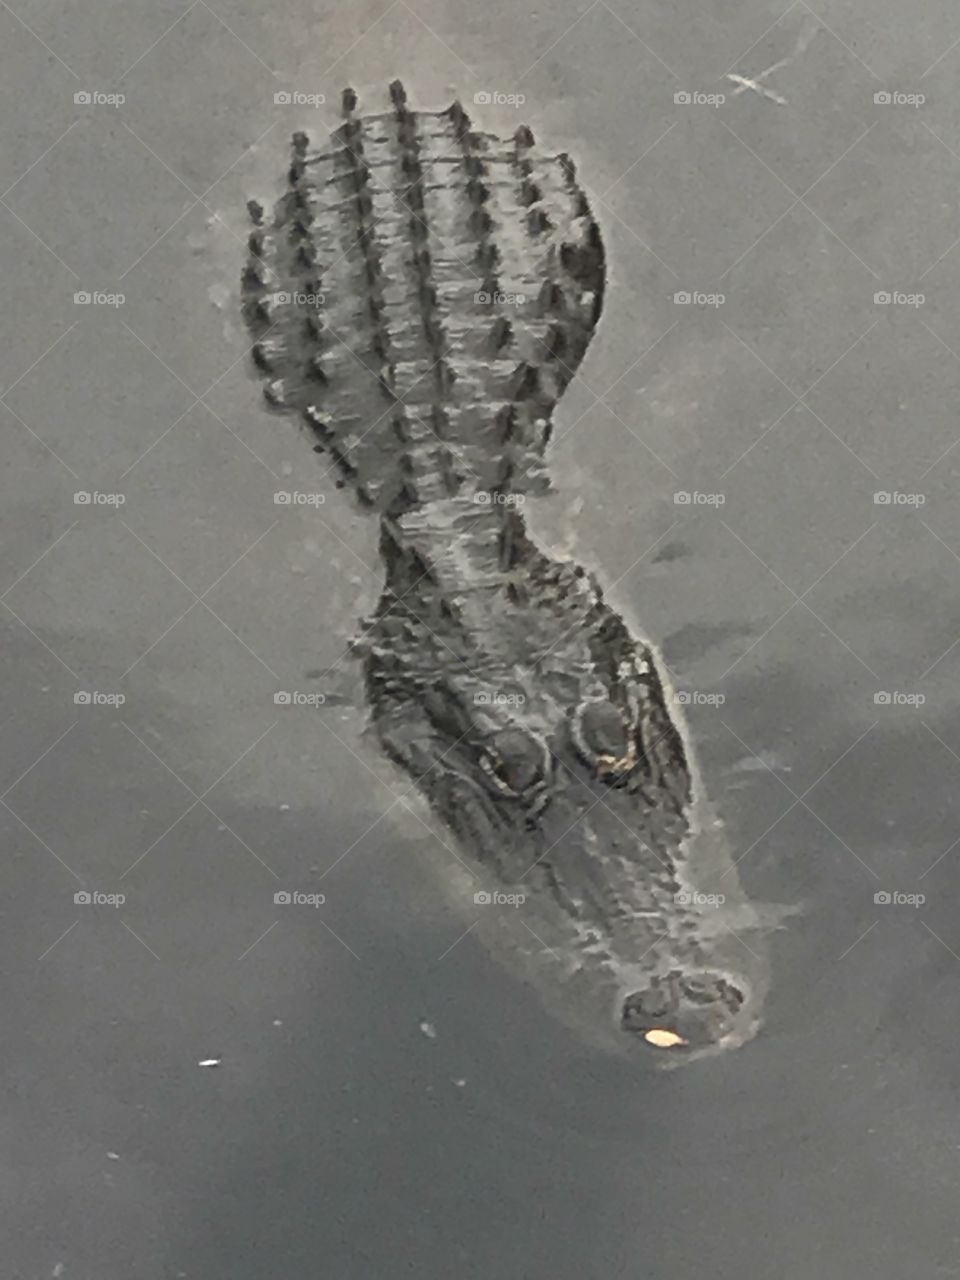 Gator close up